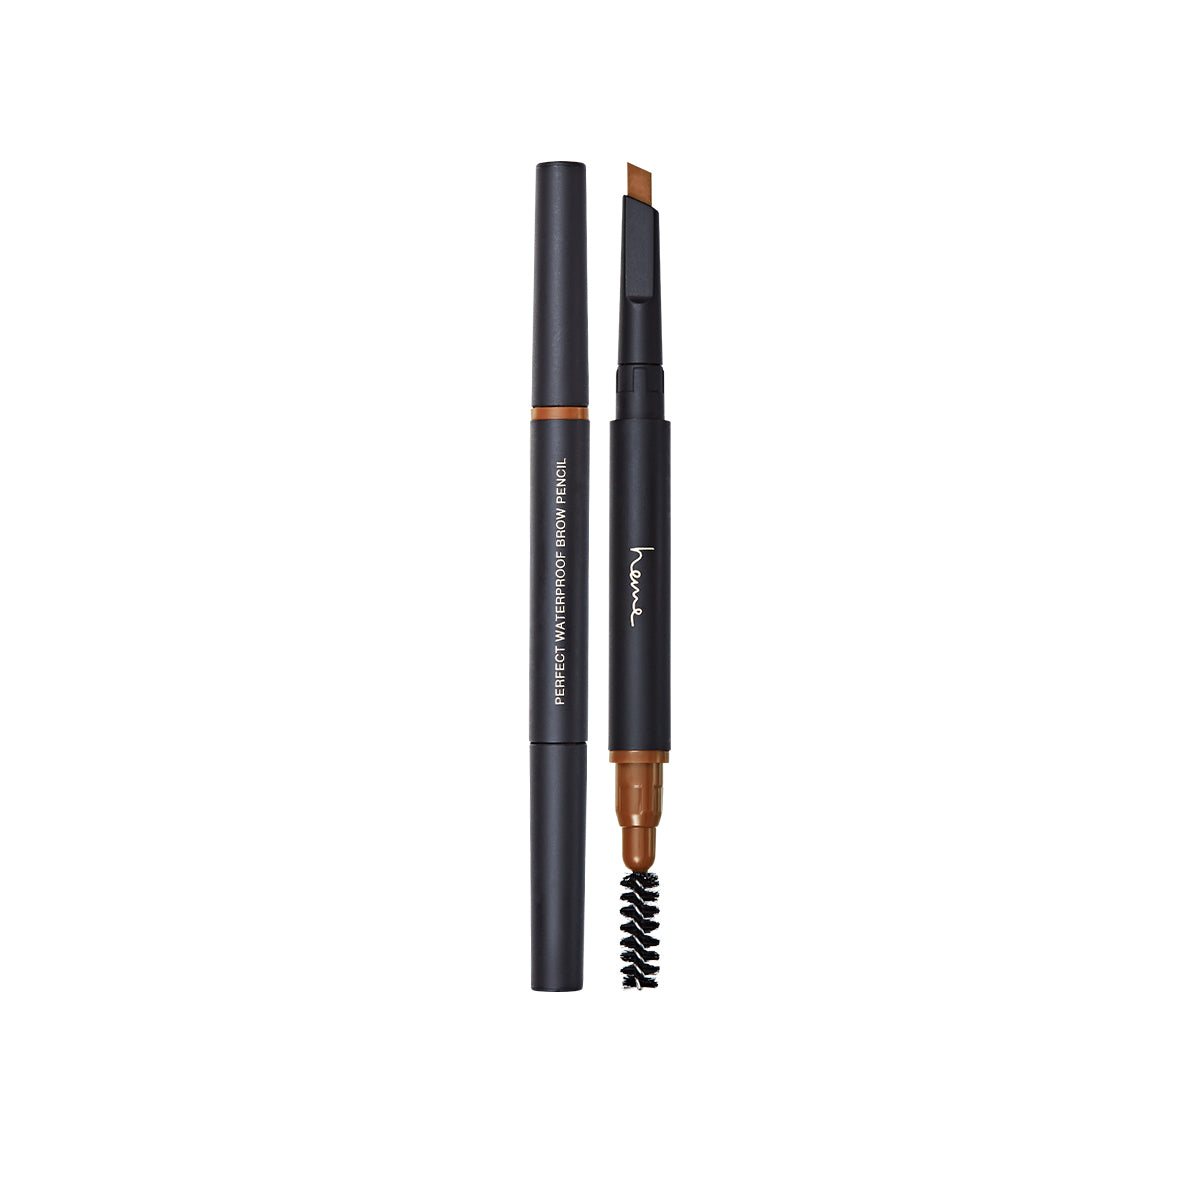 【HEME】Perfect Waterproof Brow Pencil - Caramel Brown 0.5g